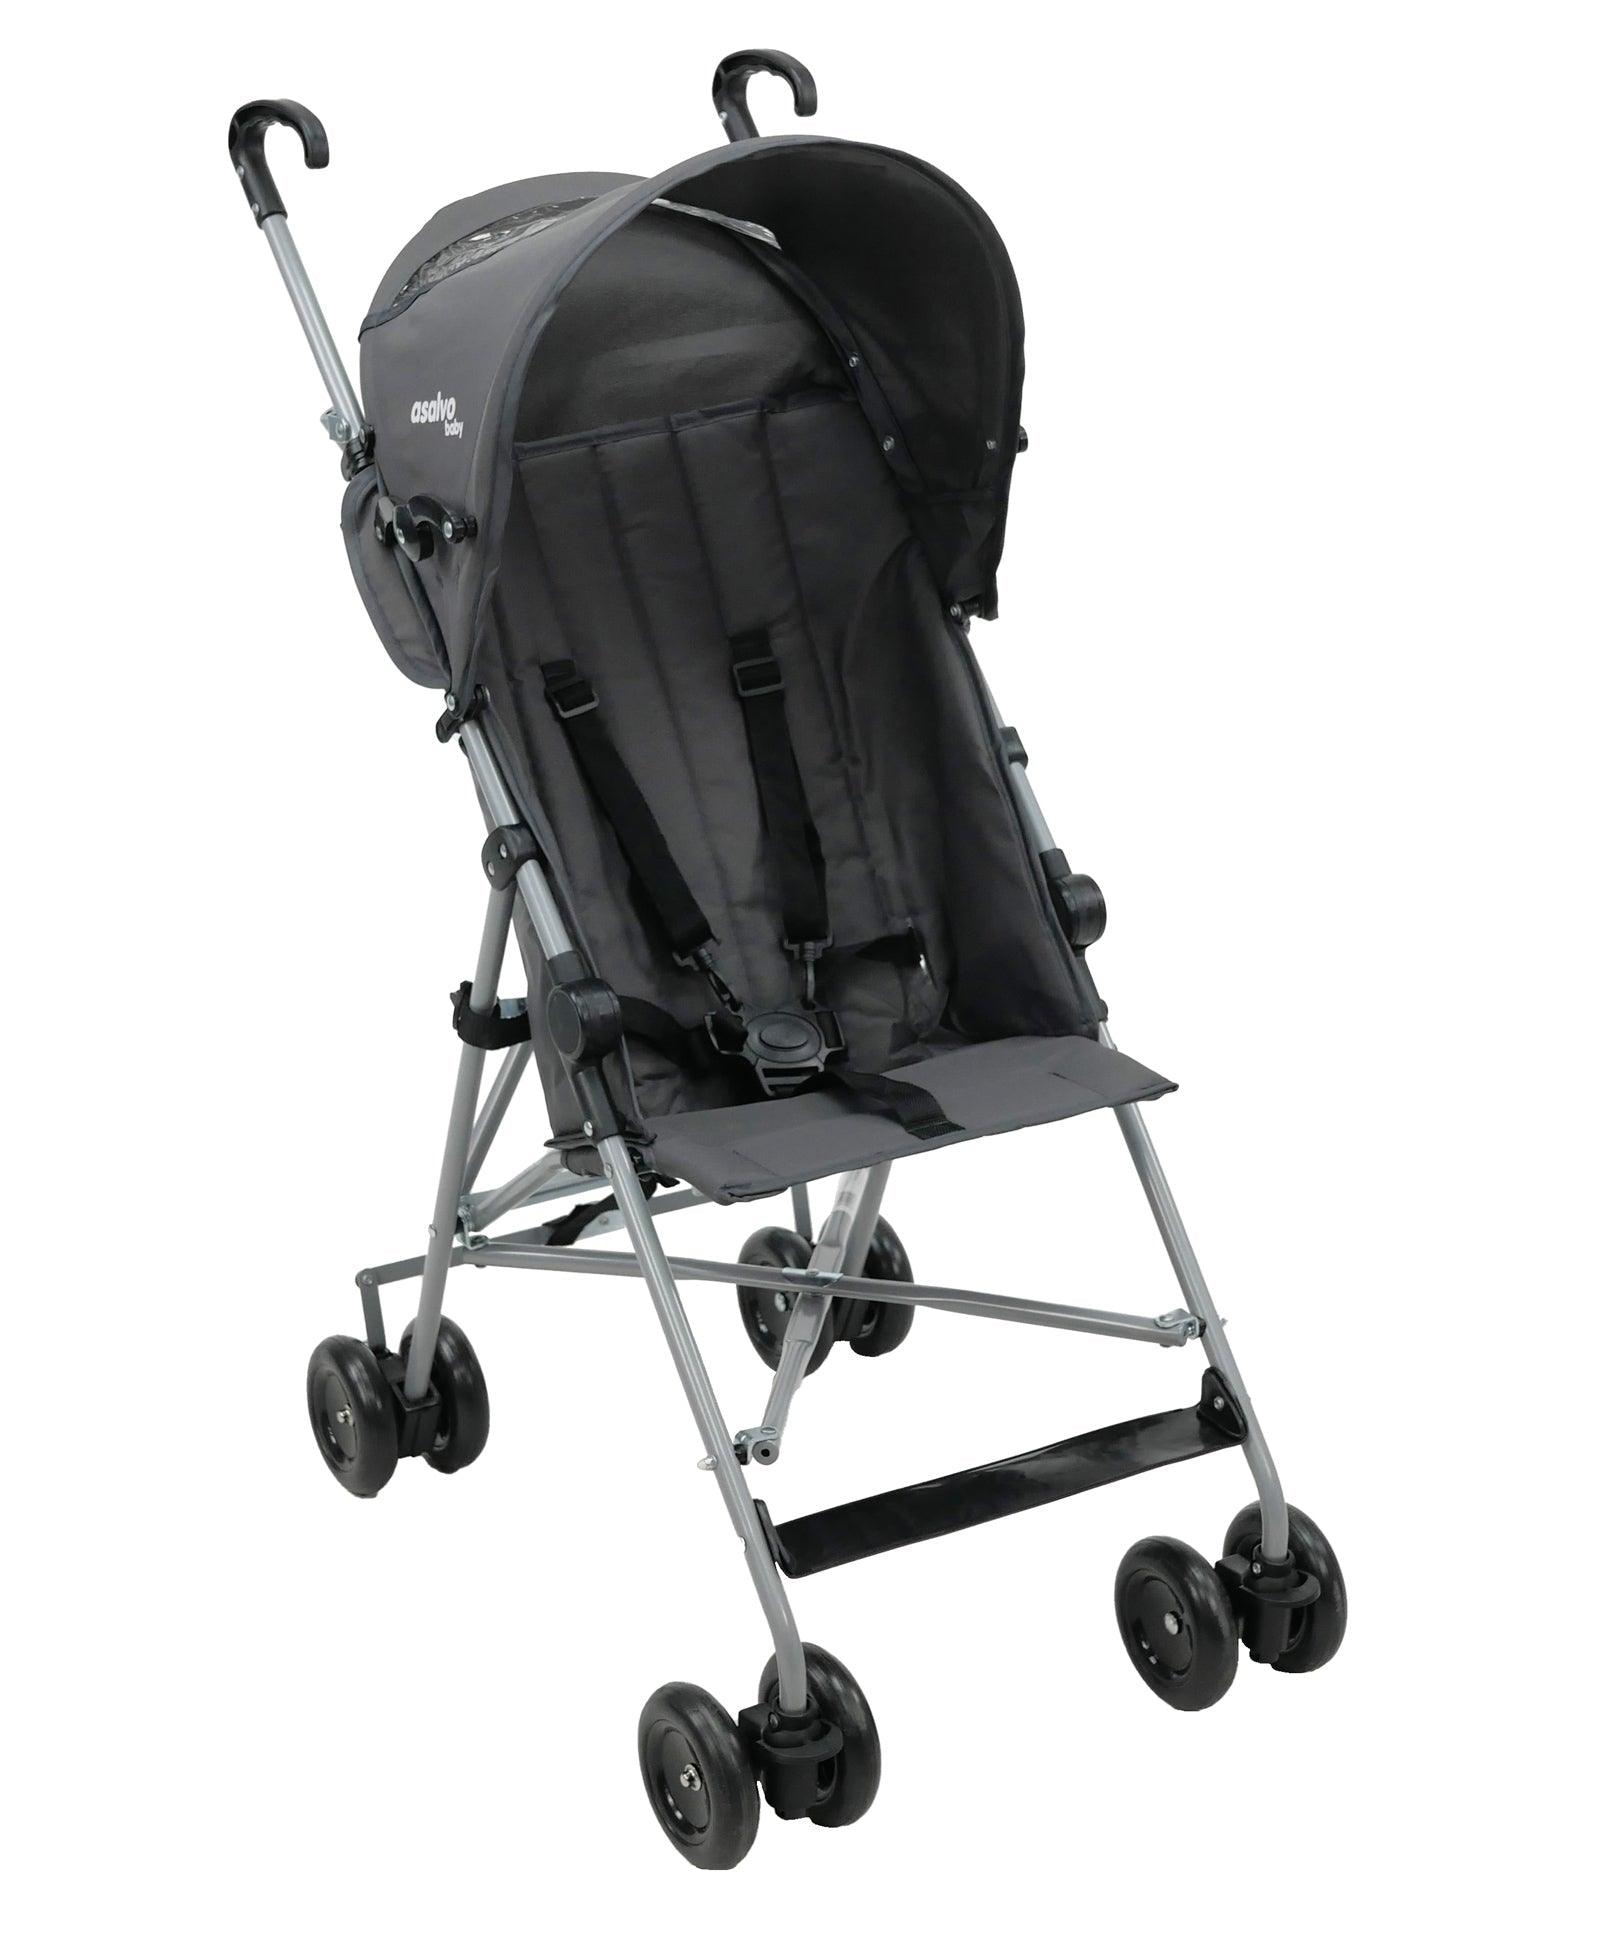 PATOYS | Asalvo 16256 Stroller Moving Coa l For Newborn Baby, Infant Kids, - PATOYS